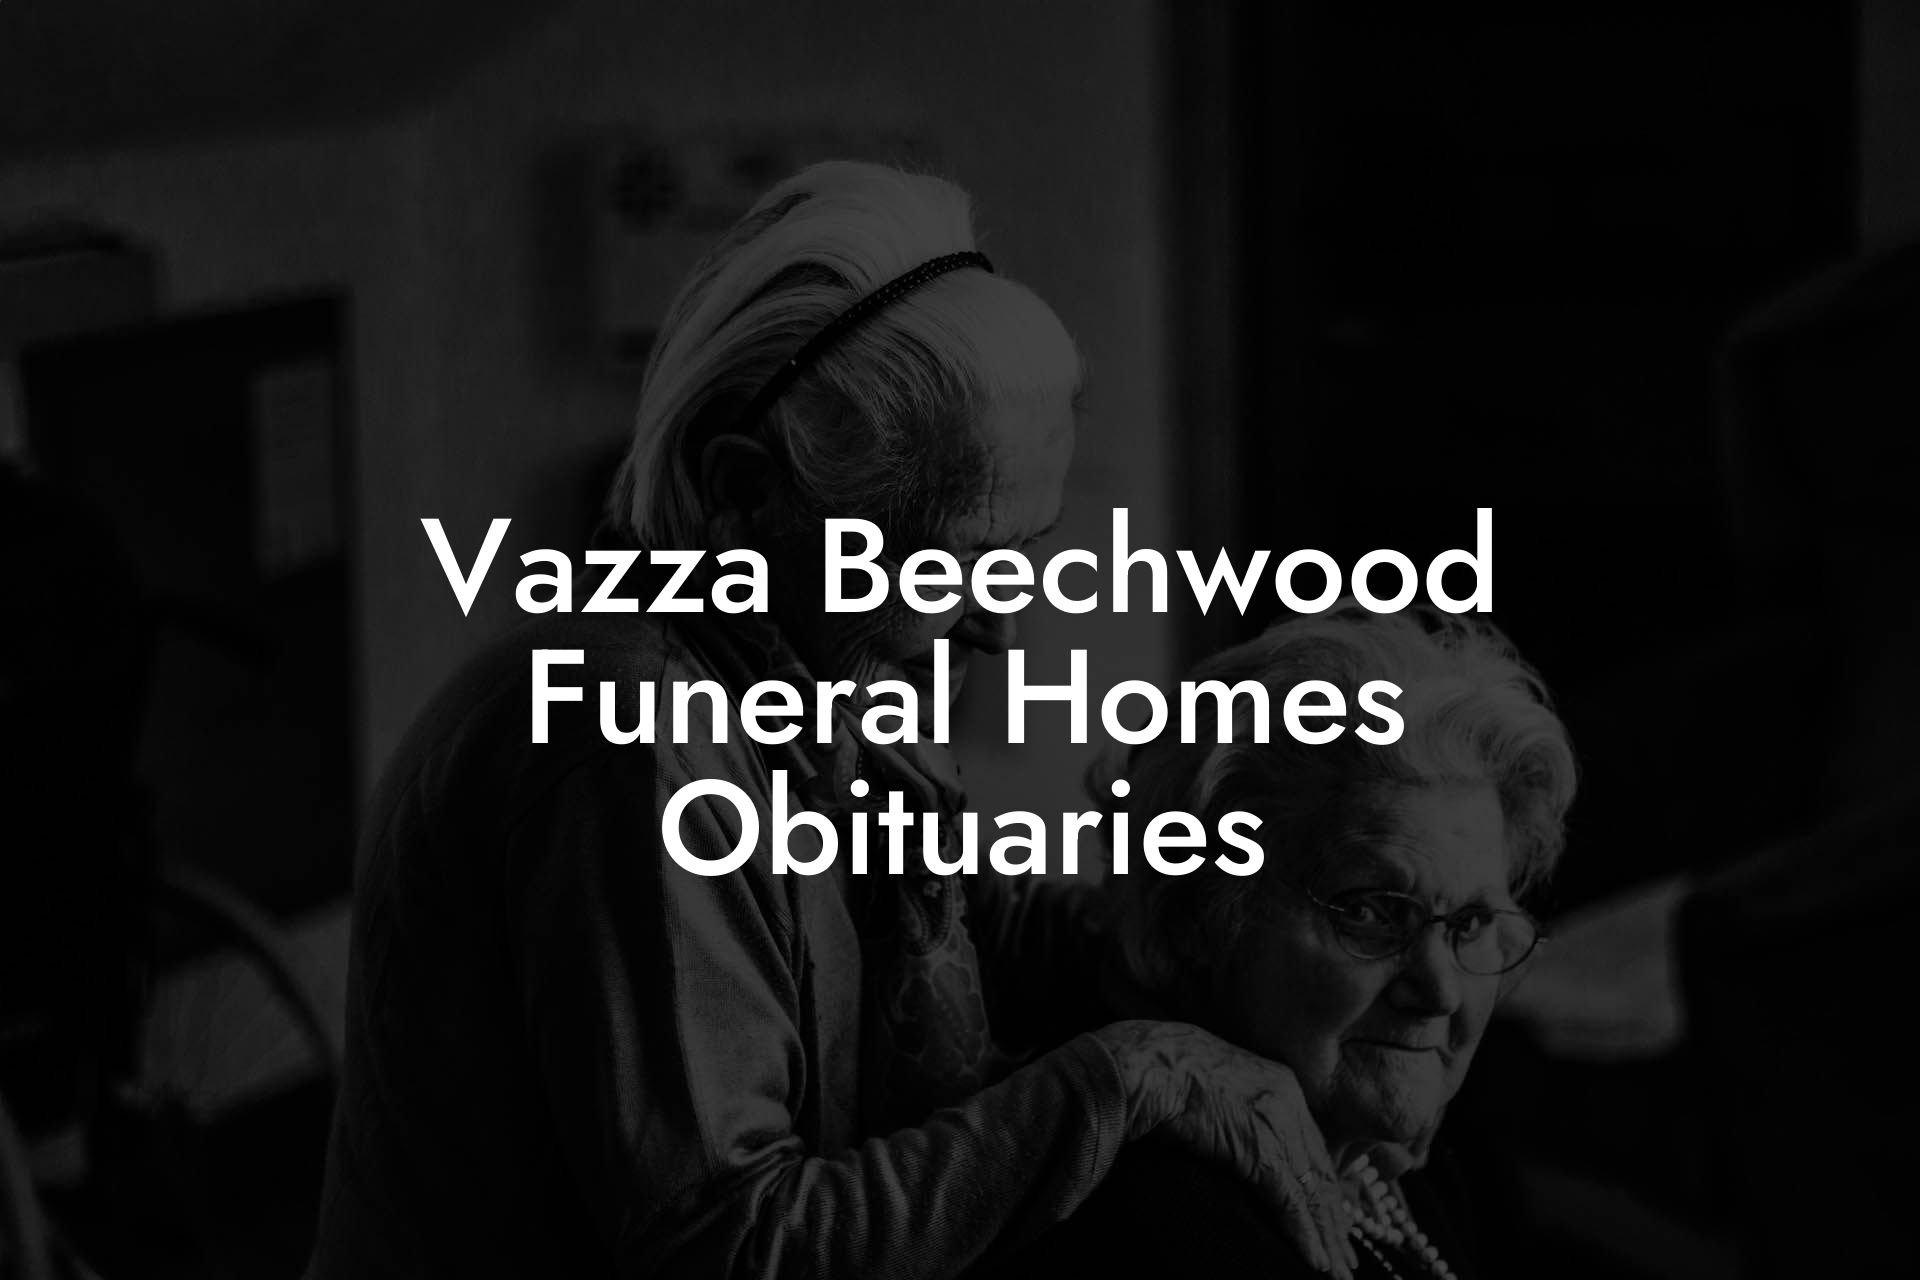 Vazza Beechwood Funeral Homes Obituaries